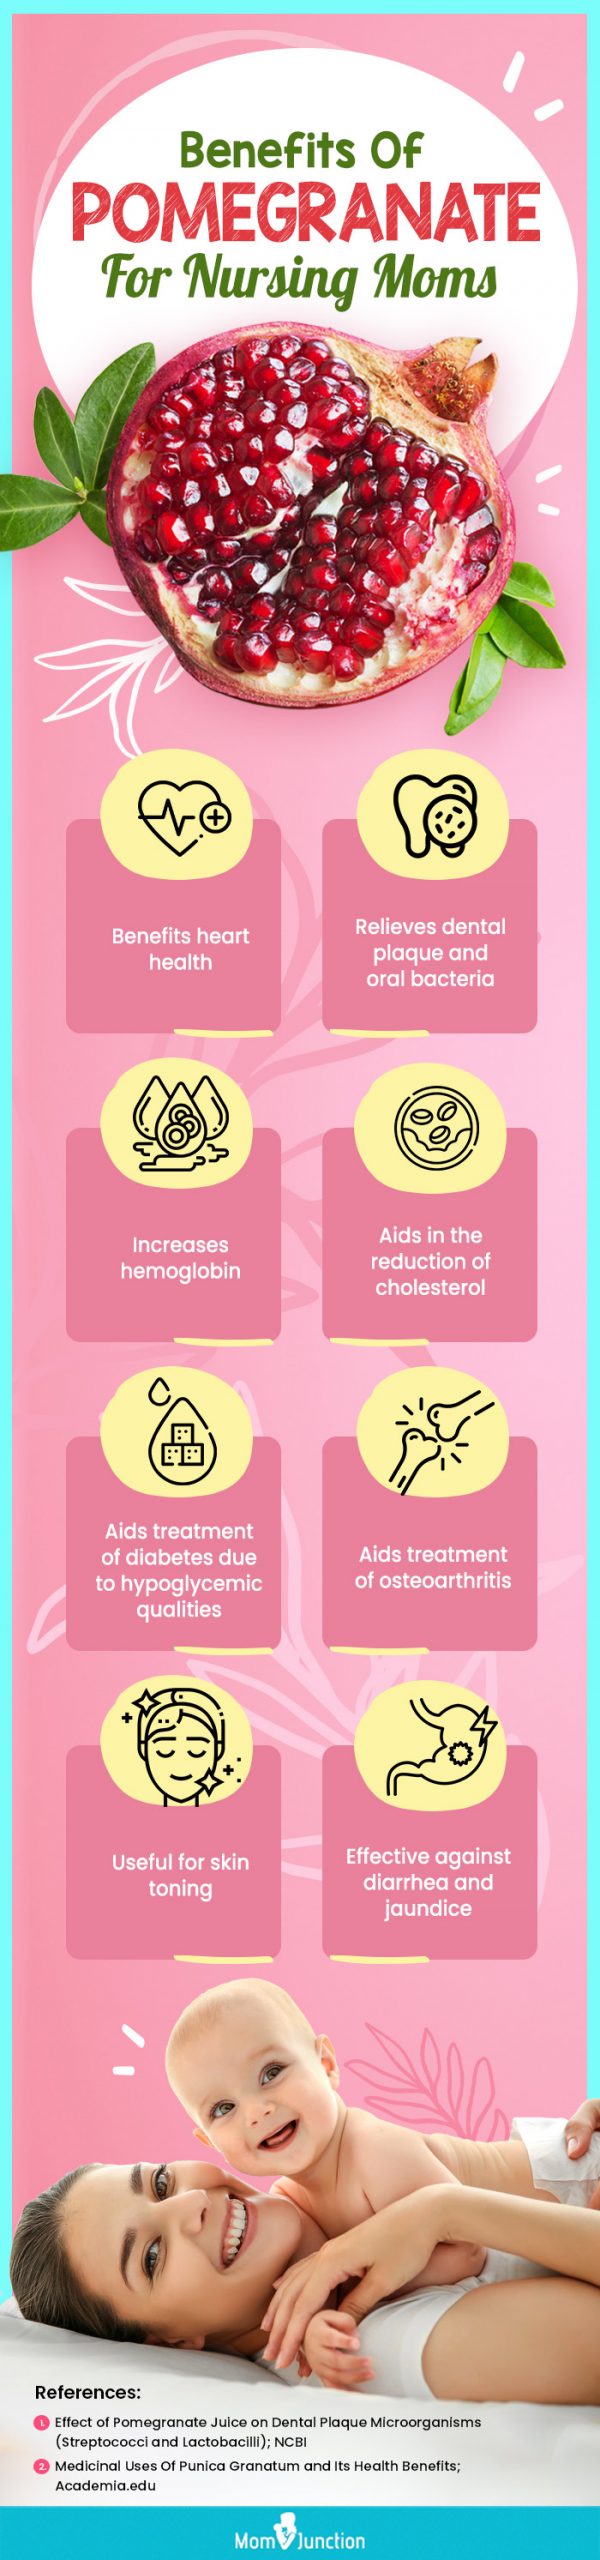 benefits of pomegranate for nursing moms (infographic)